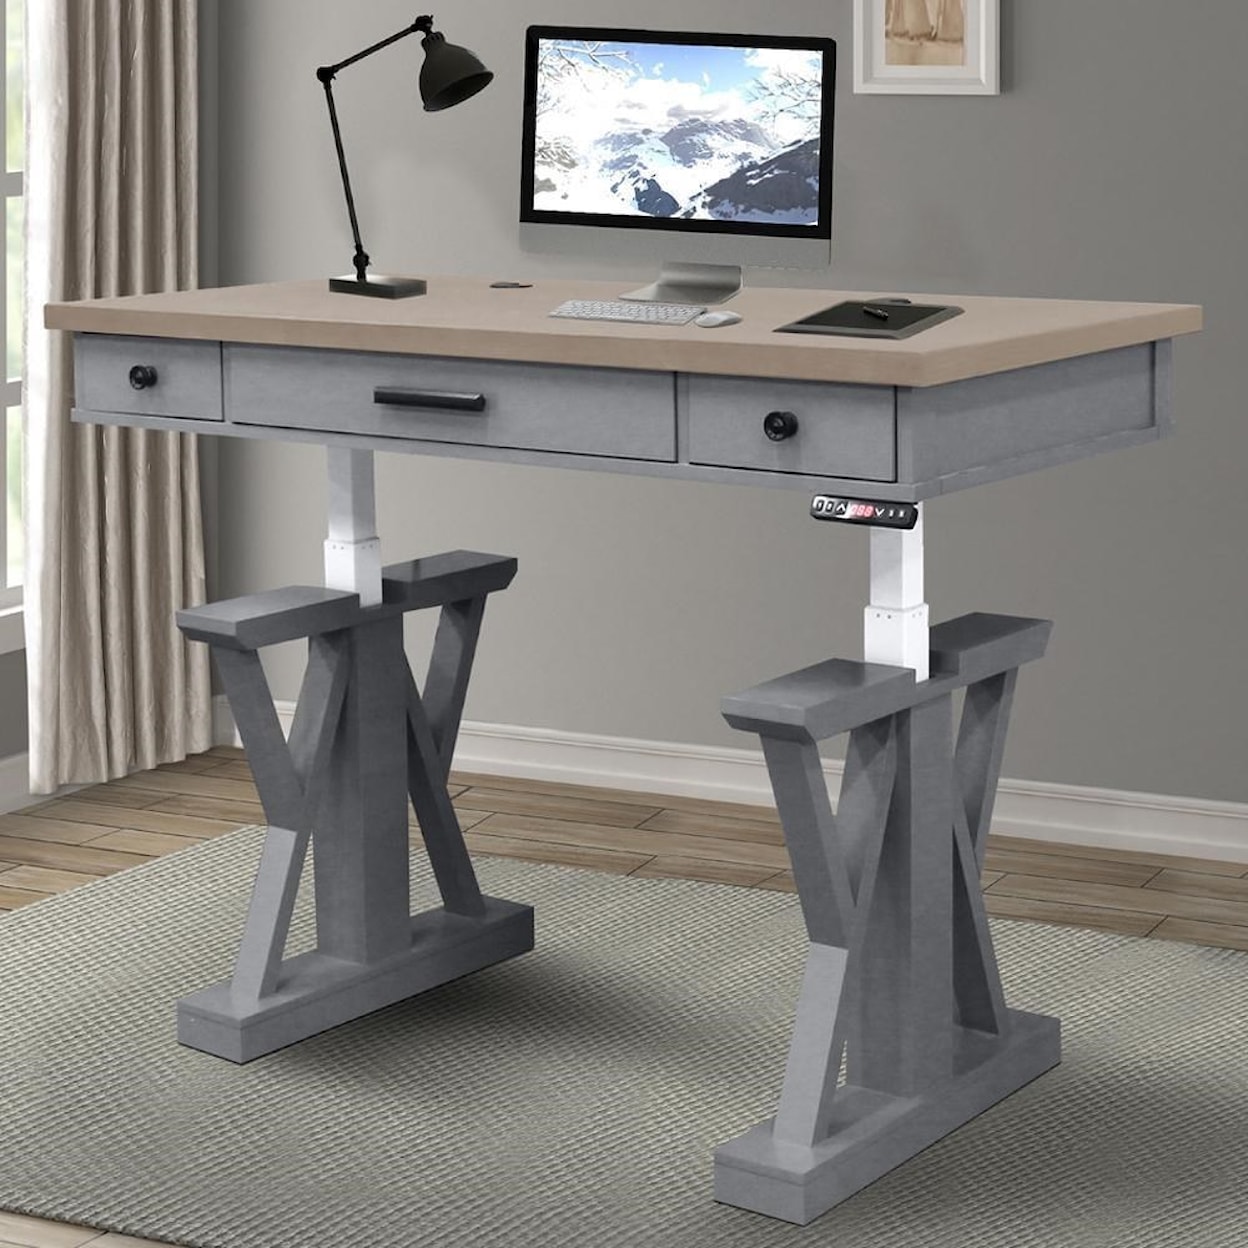 Paramount Furniture Americana Modern Power Lift Desk